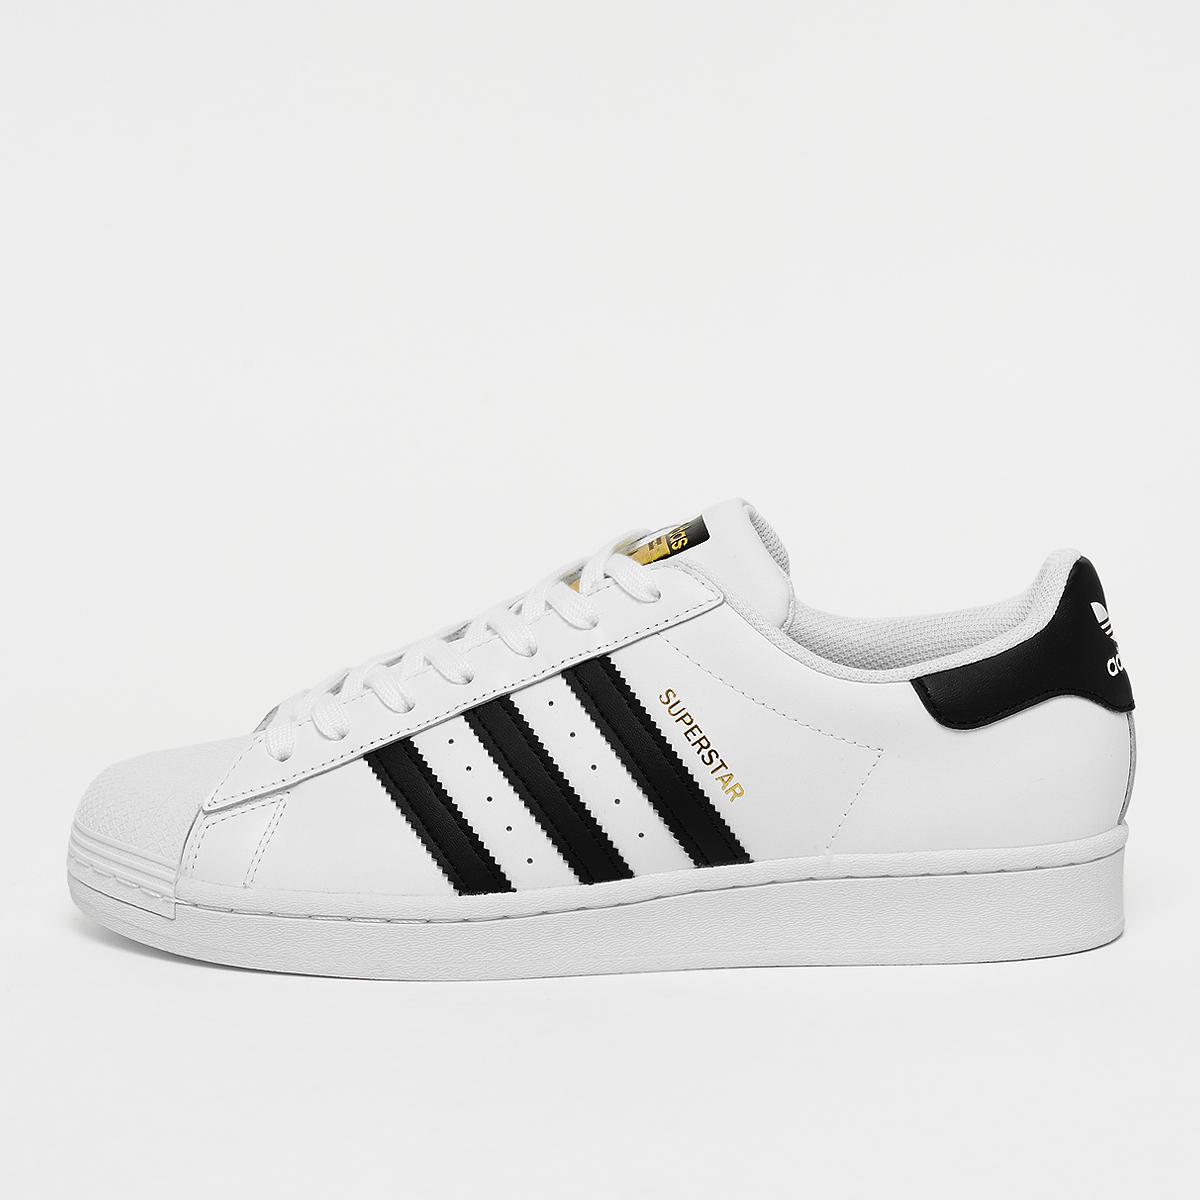 Sneaker Superstar, adidas Originals, Footwear, ftwr white/core black/ftwr white, taille: 46